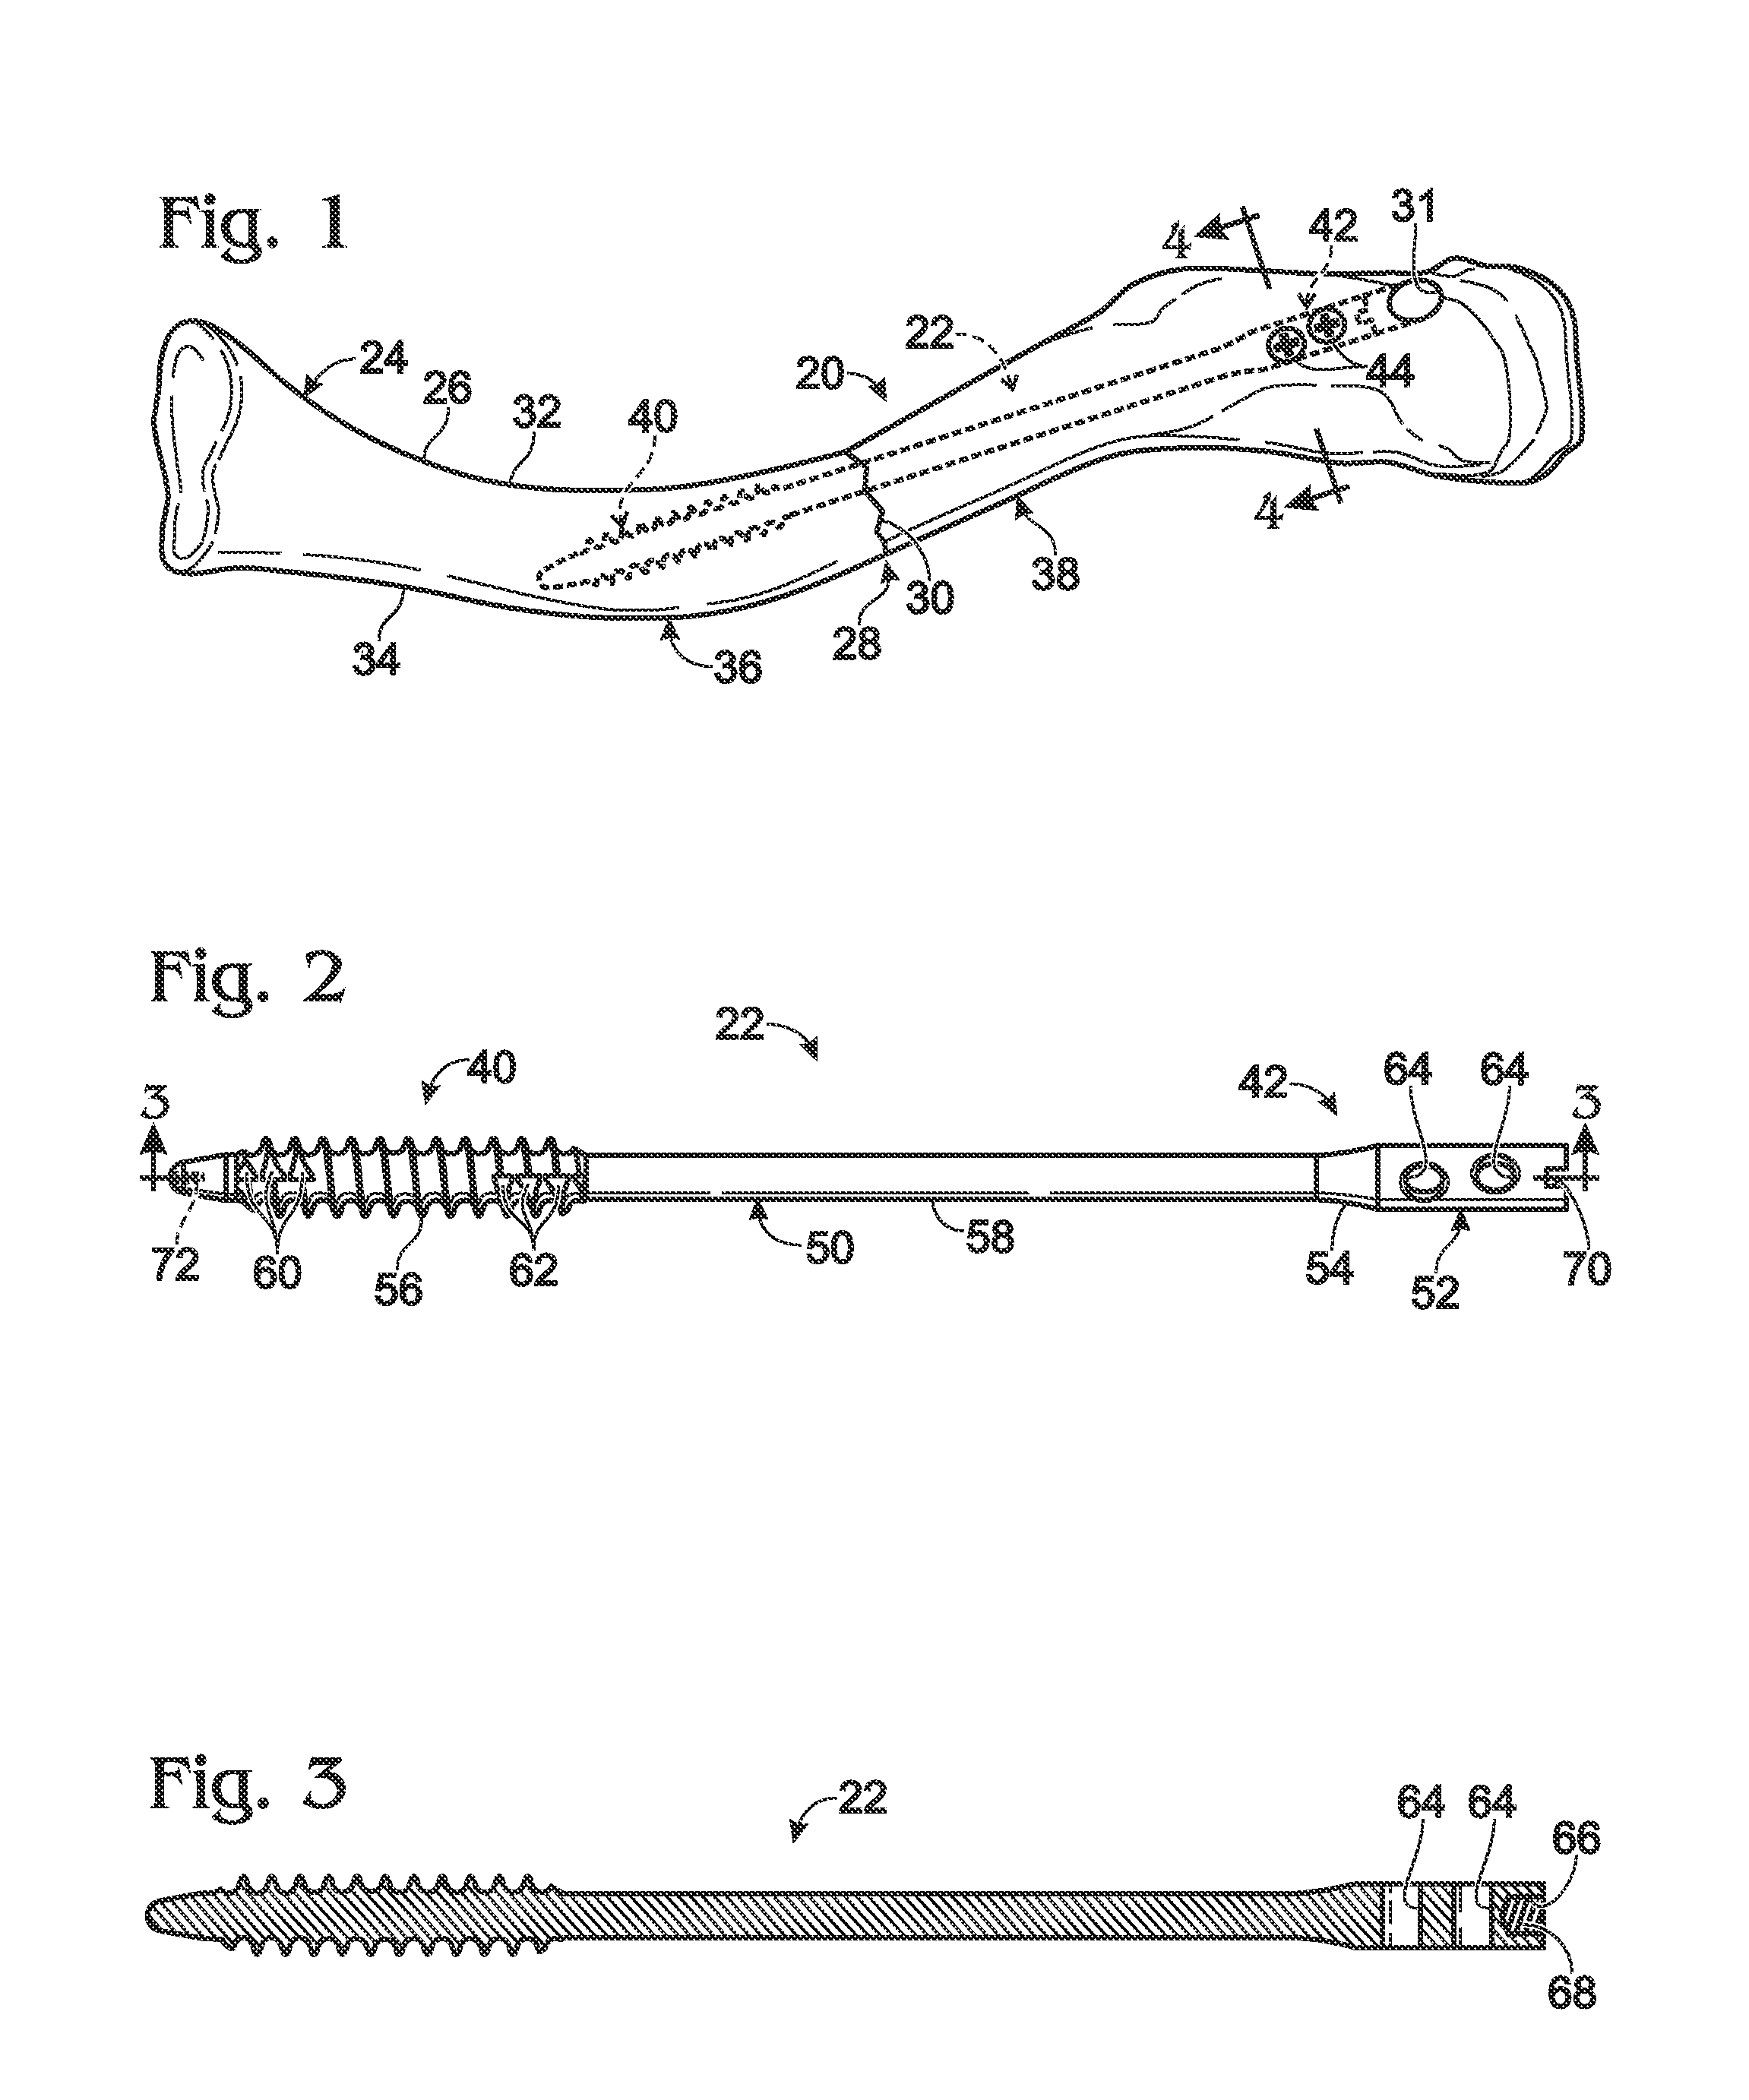 Bone fixation using an intramedullary pin